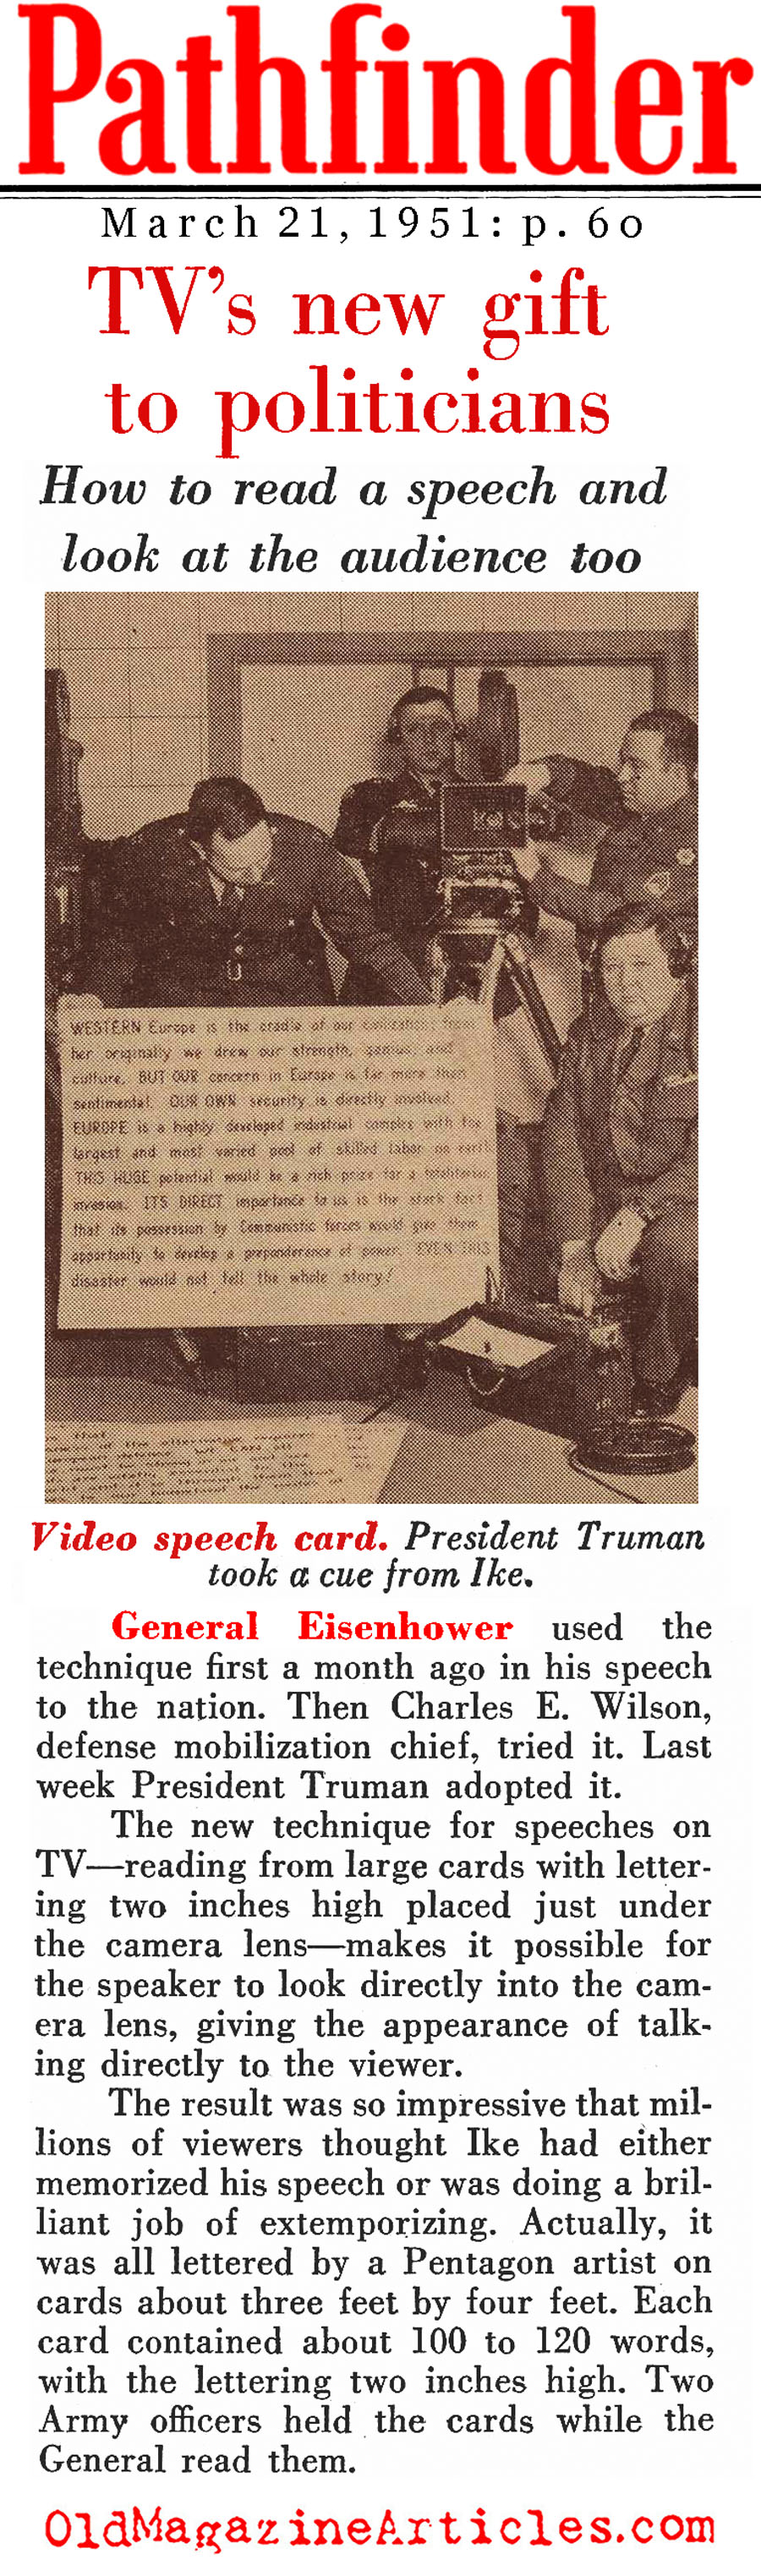 Television: God's Gift To Politicians (Pathfinder Magazine, 1951)